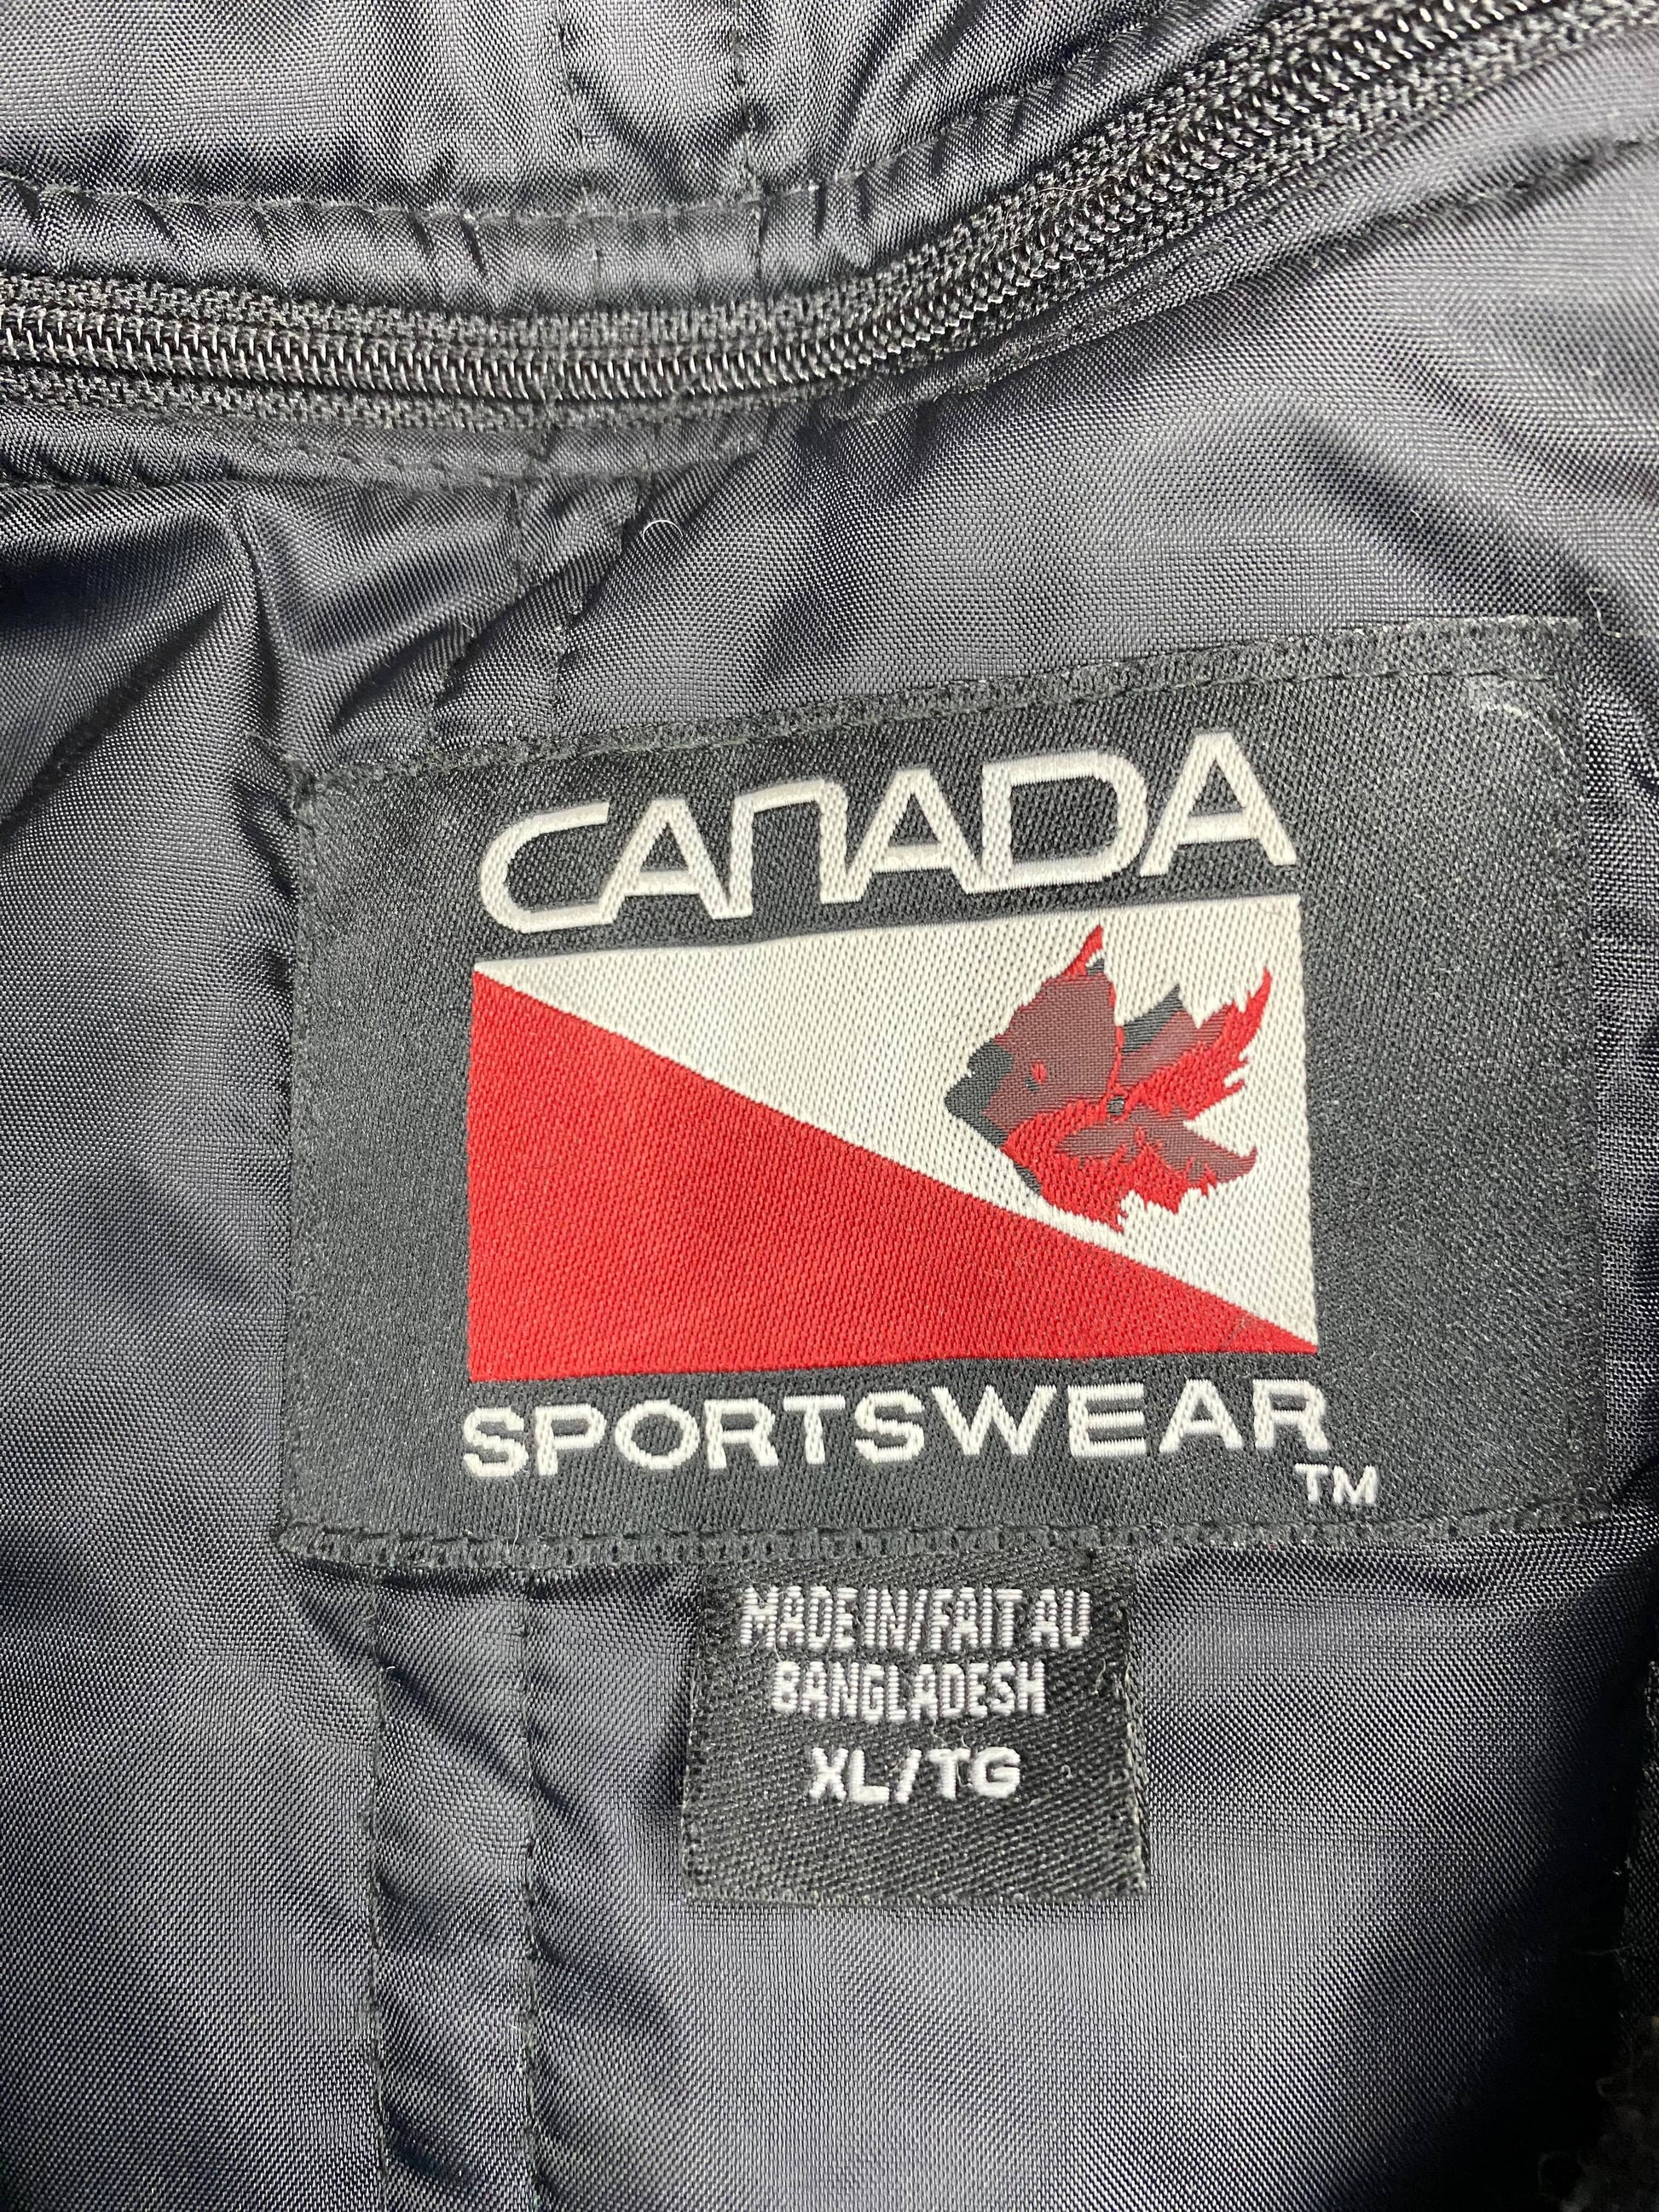 Bulldogs Football x Canada Sportswear x Leather Varsity Button Up